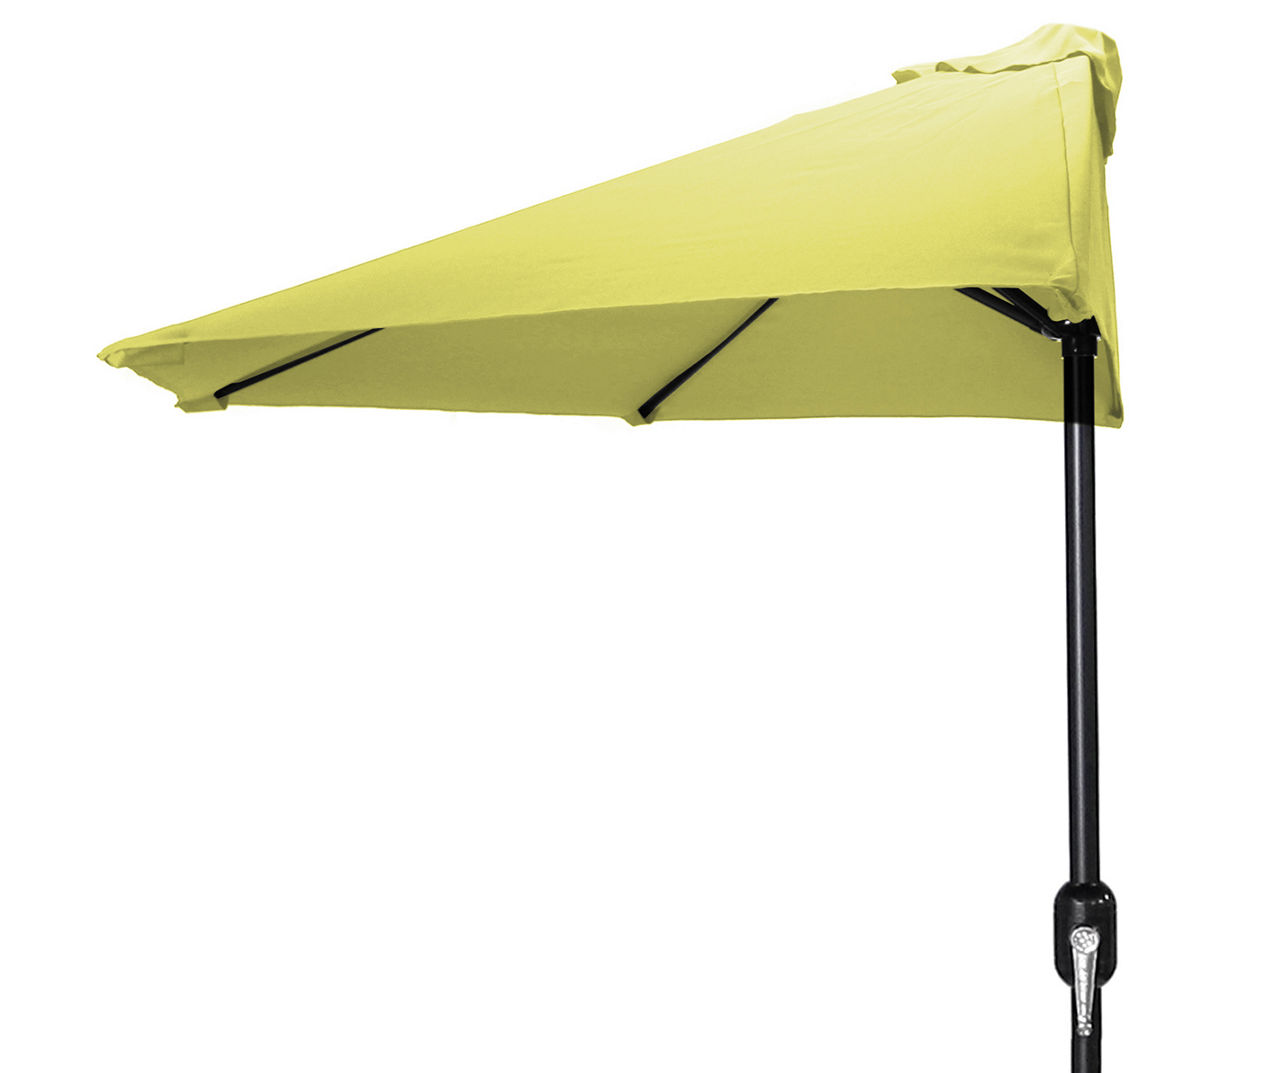 Canary Yellow Half-Round Market Patio Umbrella